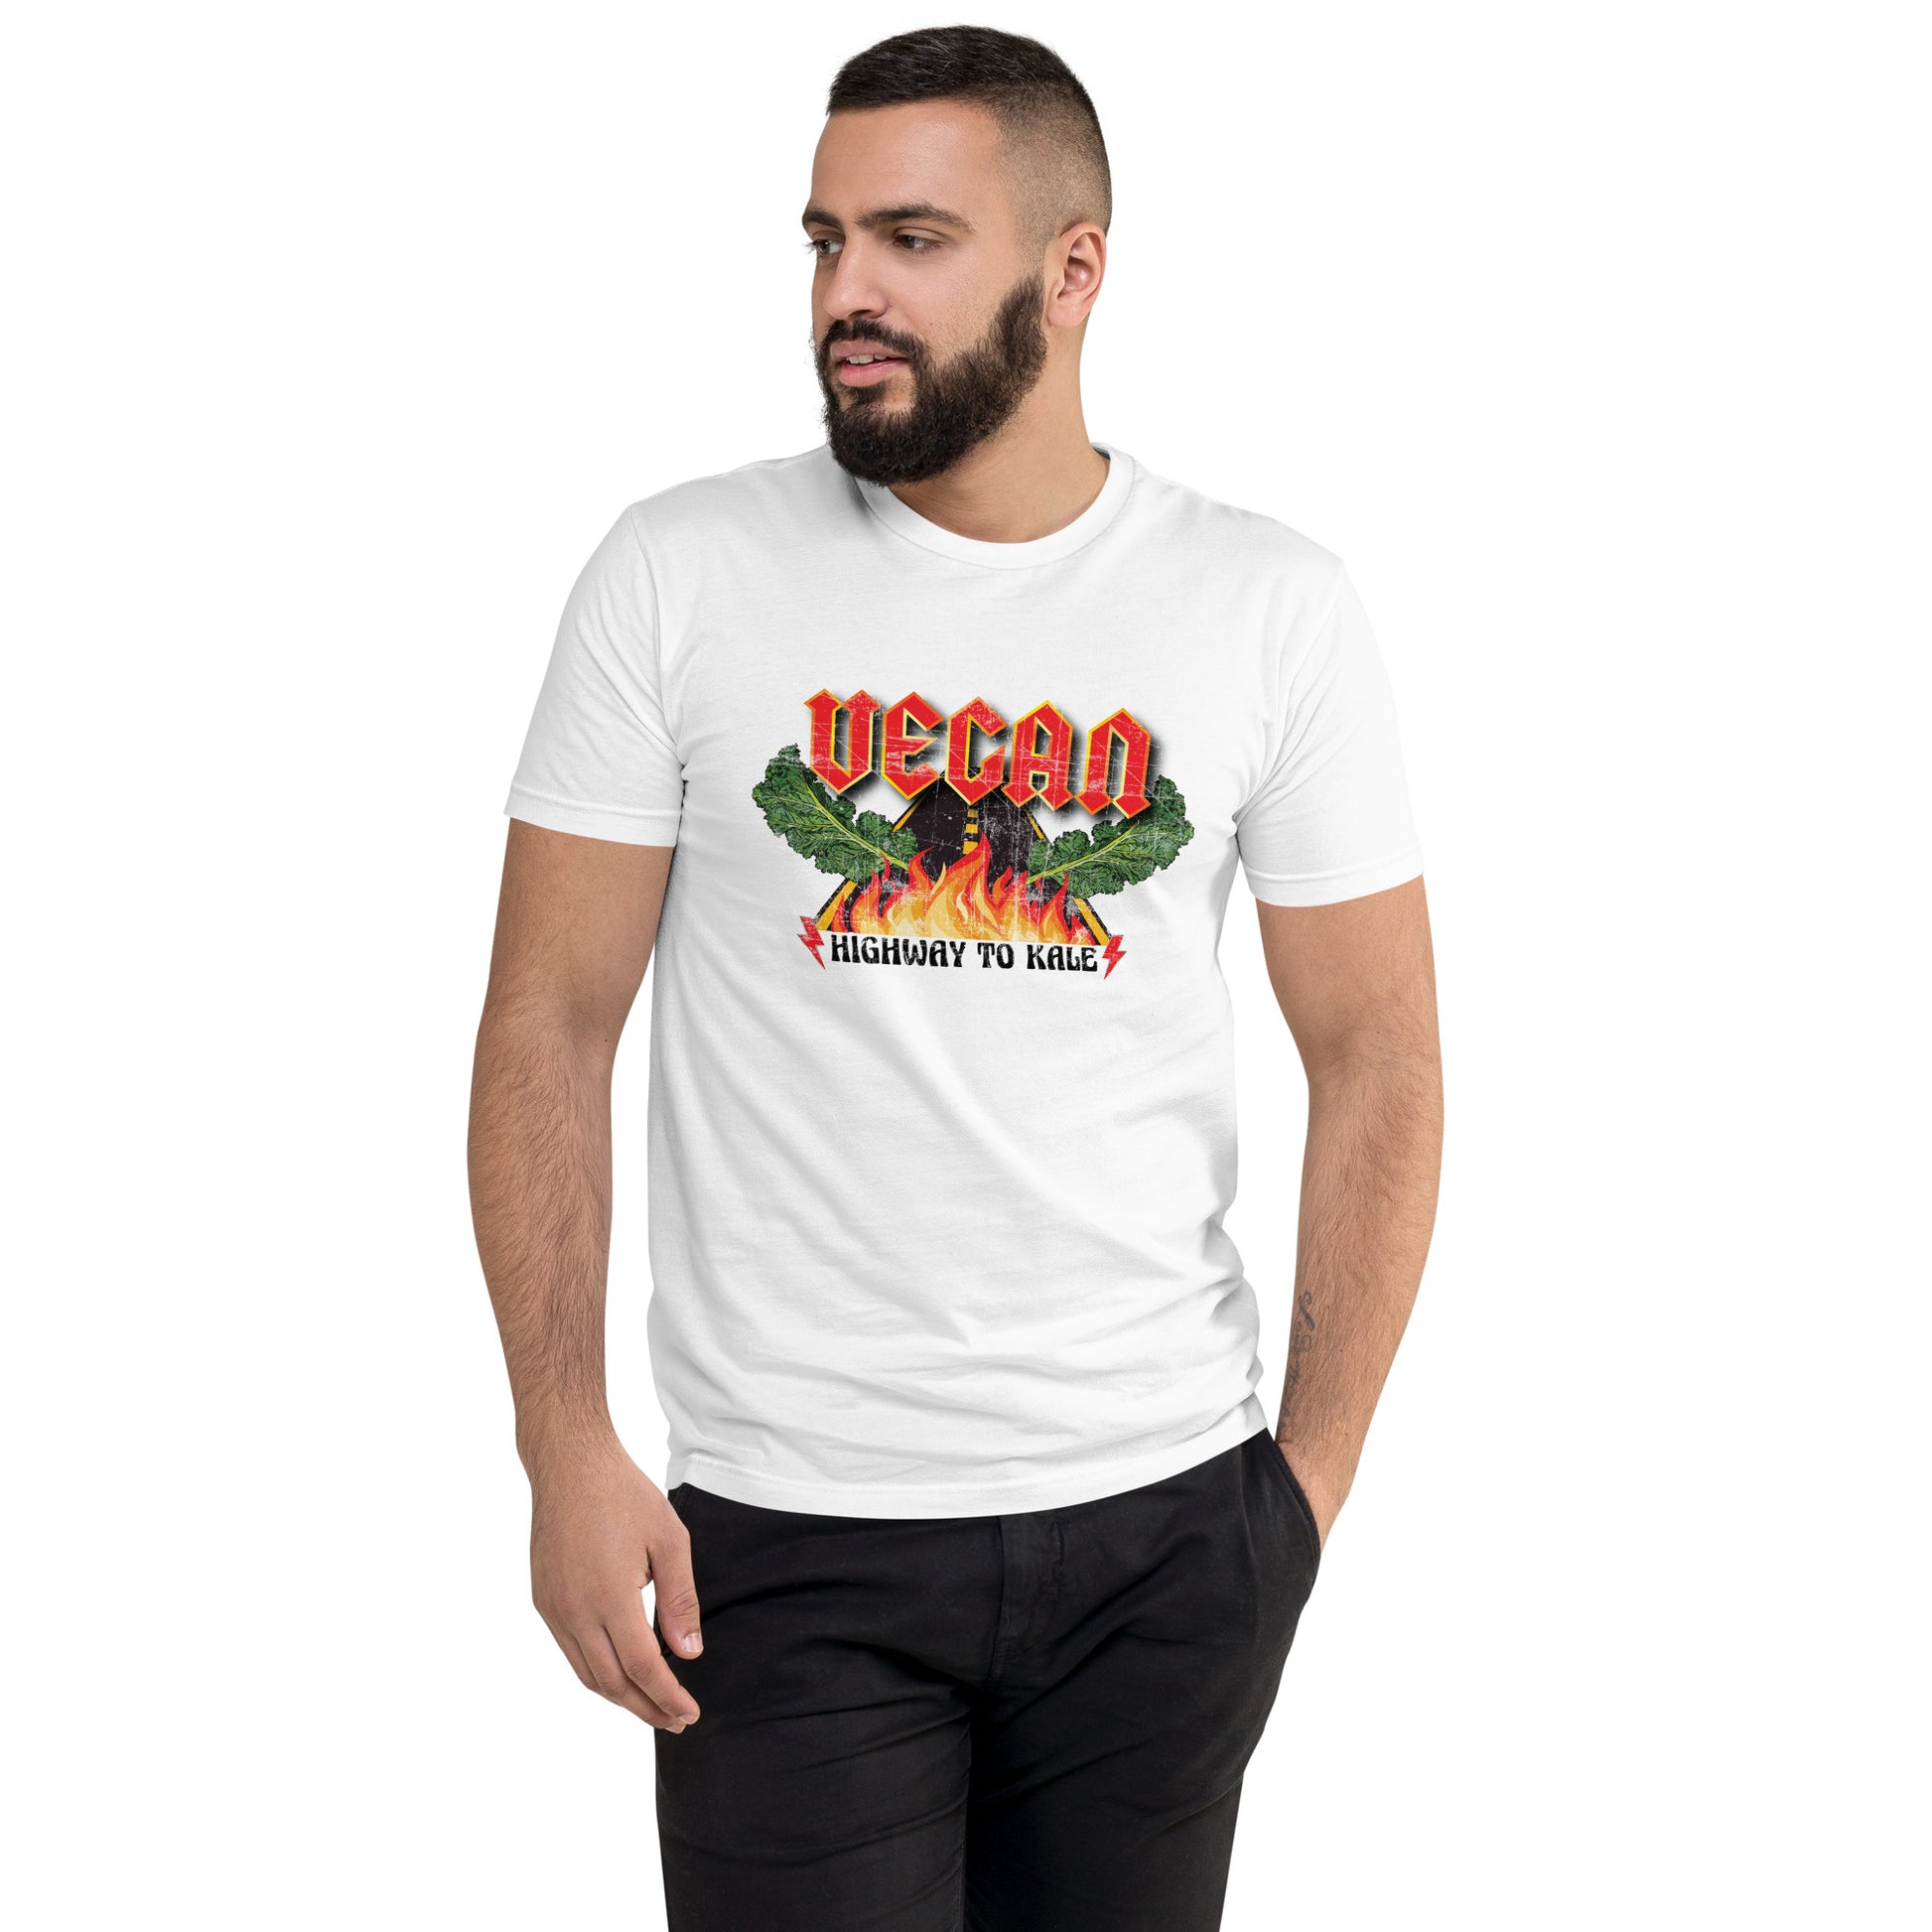 Highway to Kale white Short Sleeve T-shirt designed by White Buffalo Vegan Apparel